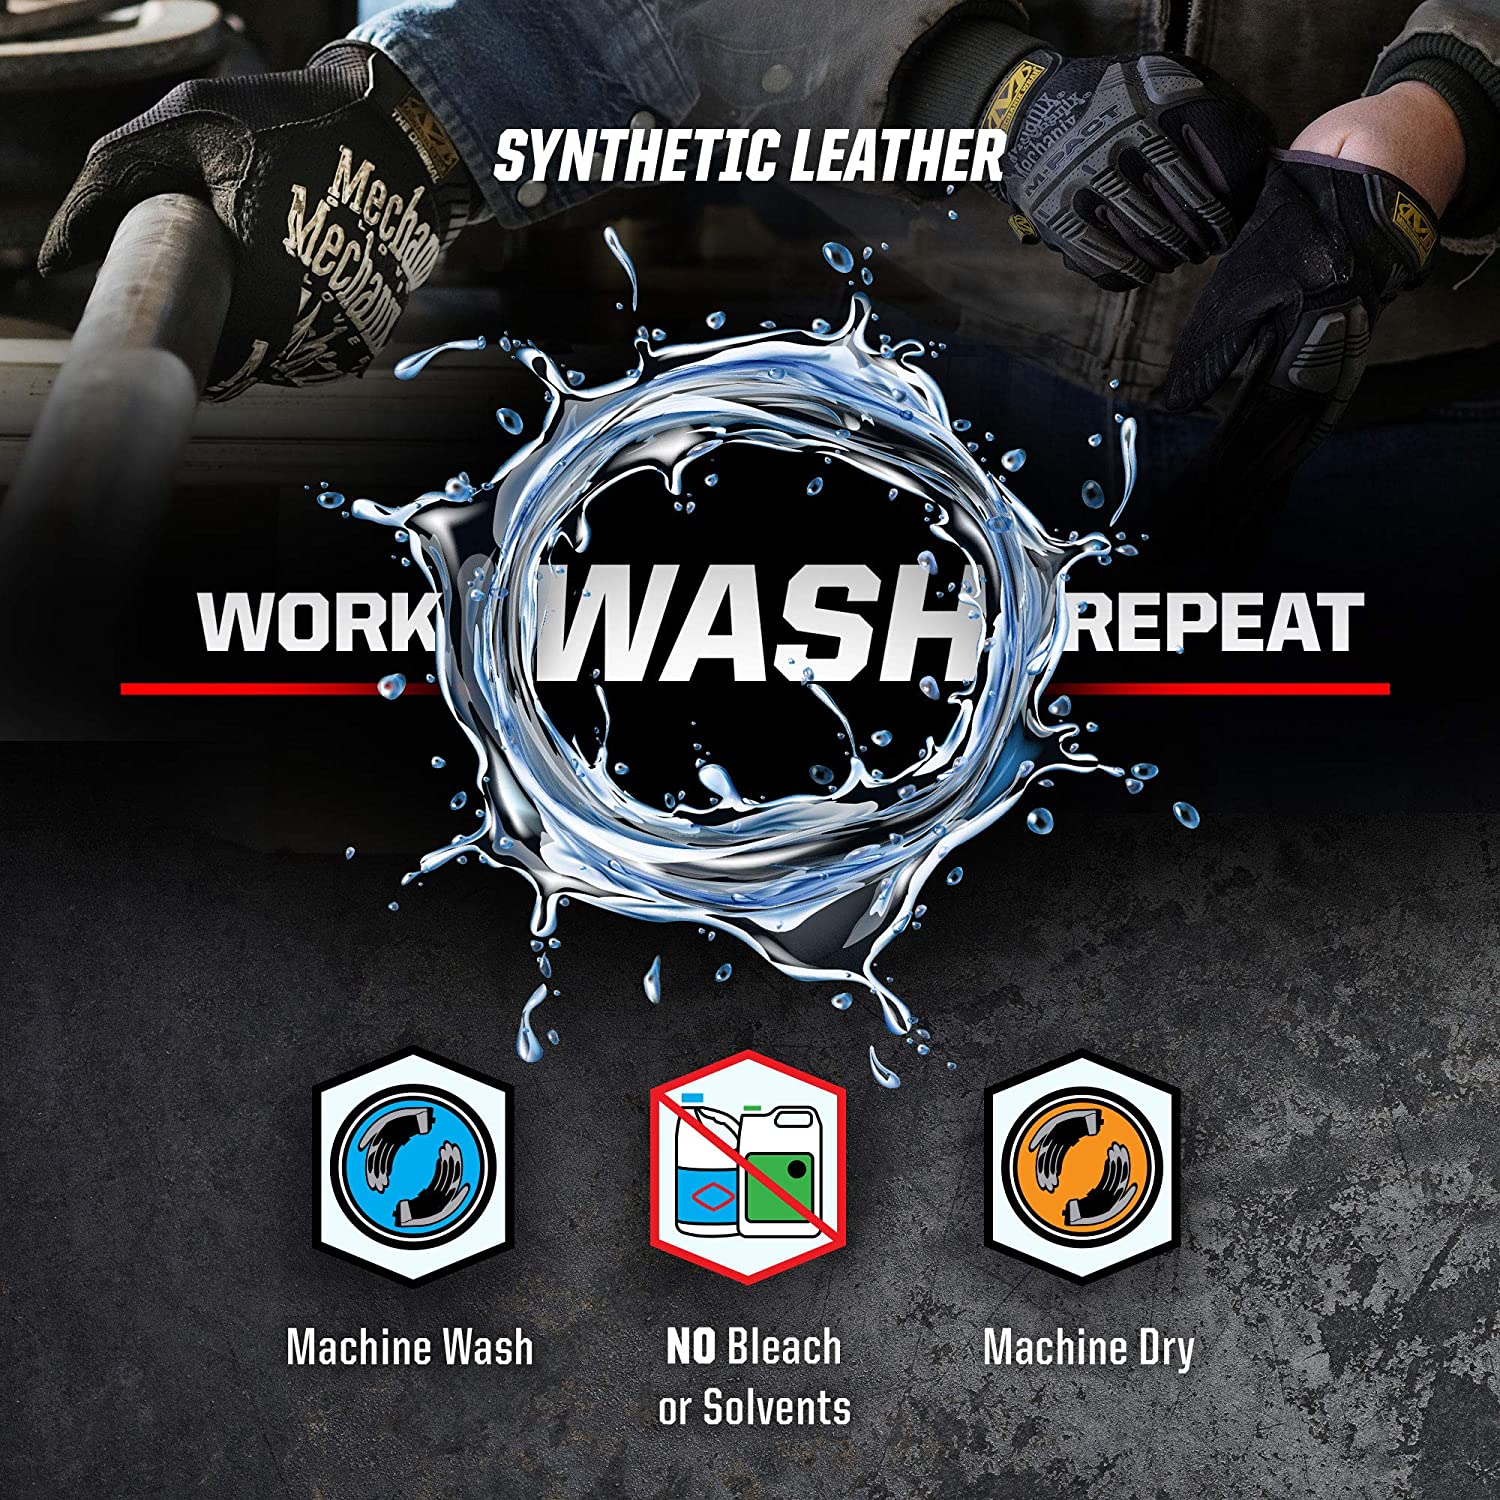 Mechanix Wear - Material4X FastFit Work Gloves (Large, Brown/Black) - MPR Tools & Equipment